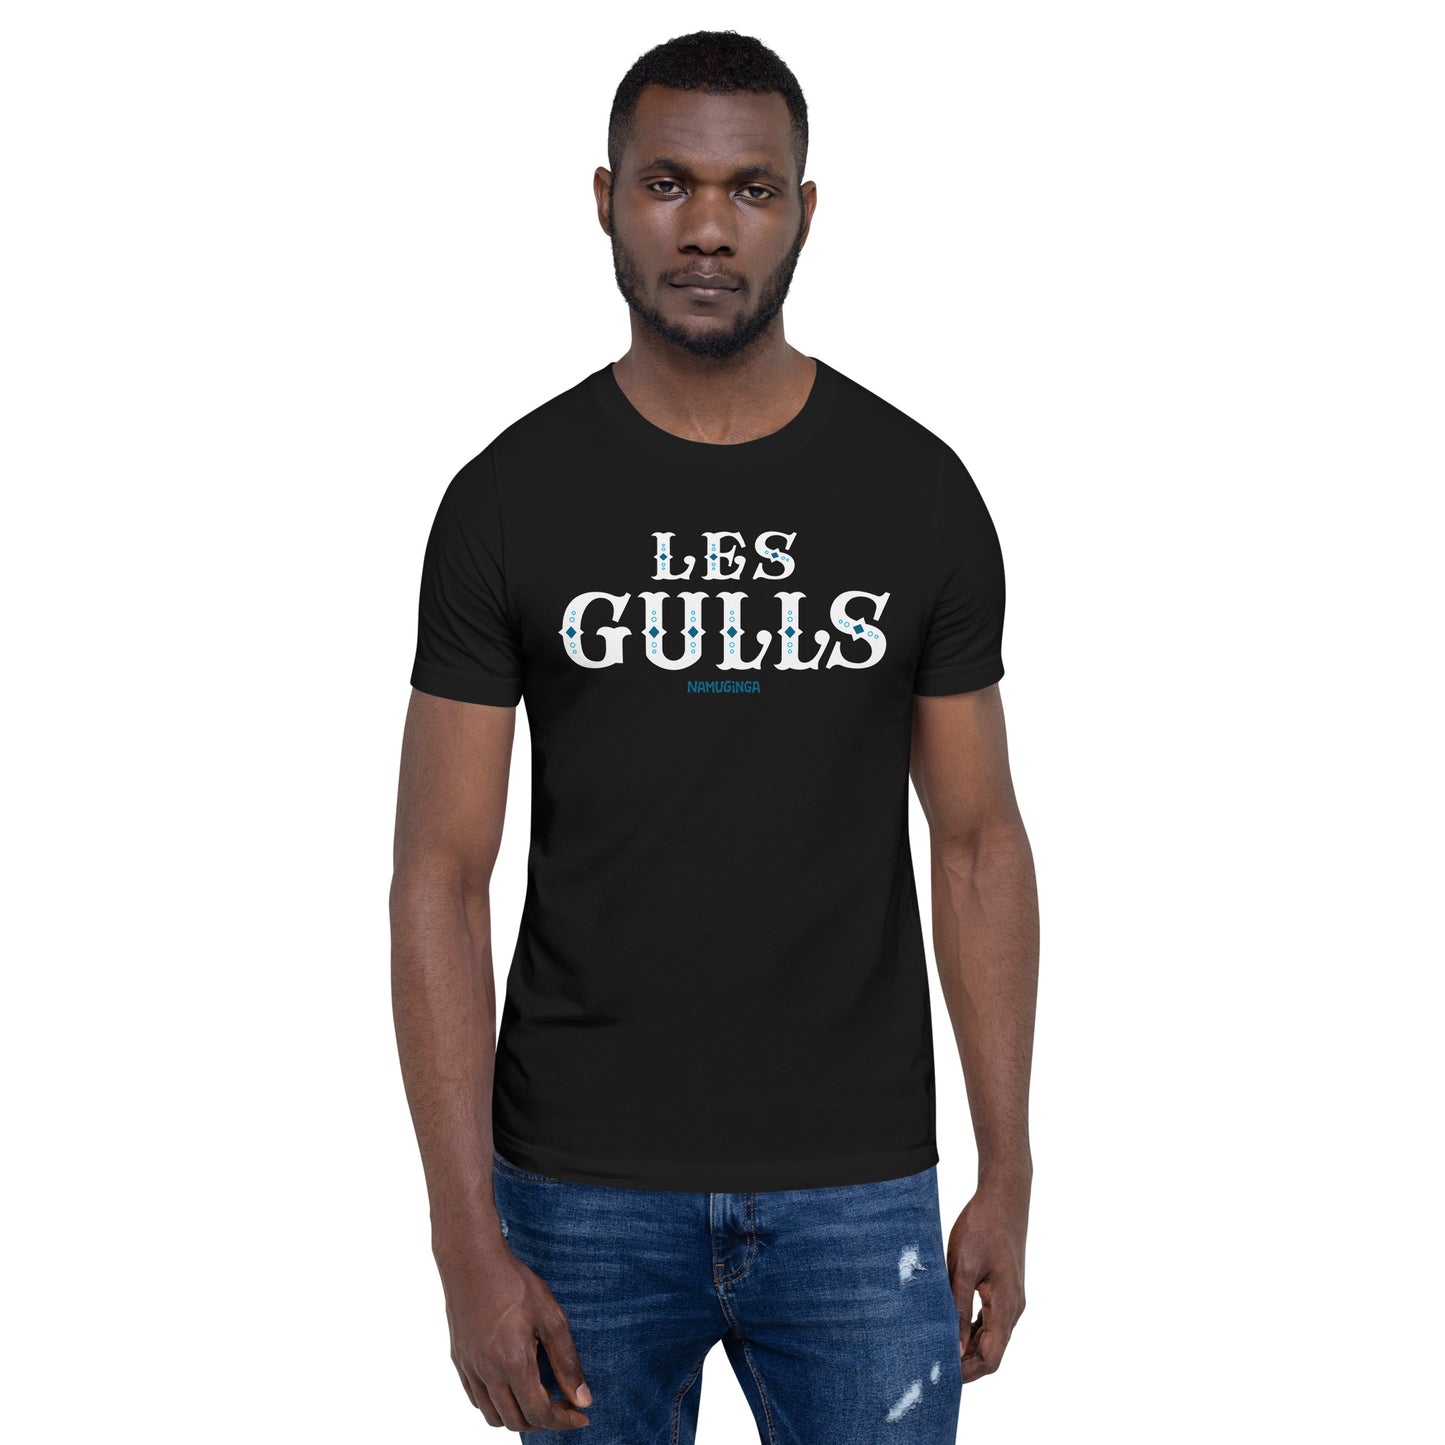 Les Gulls - Unisex t-shirt